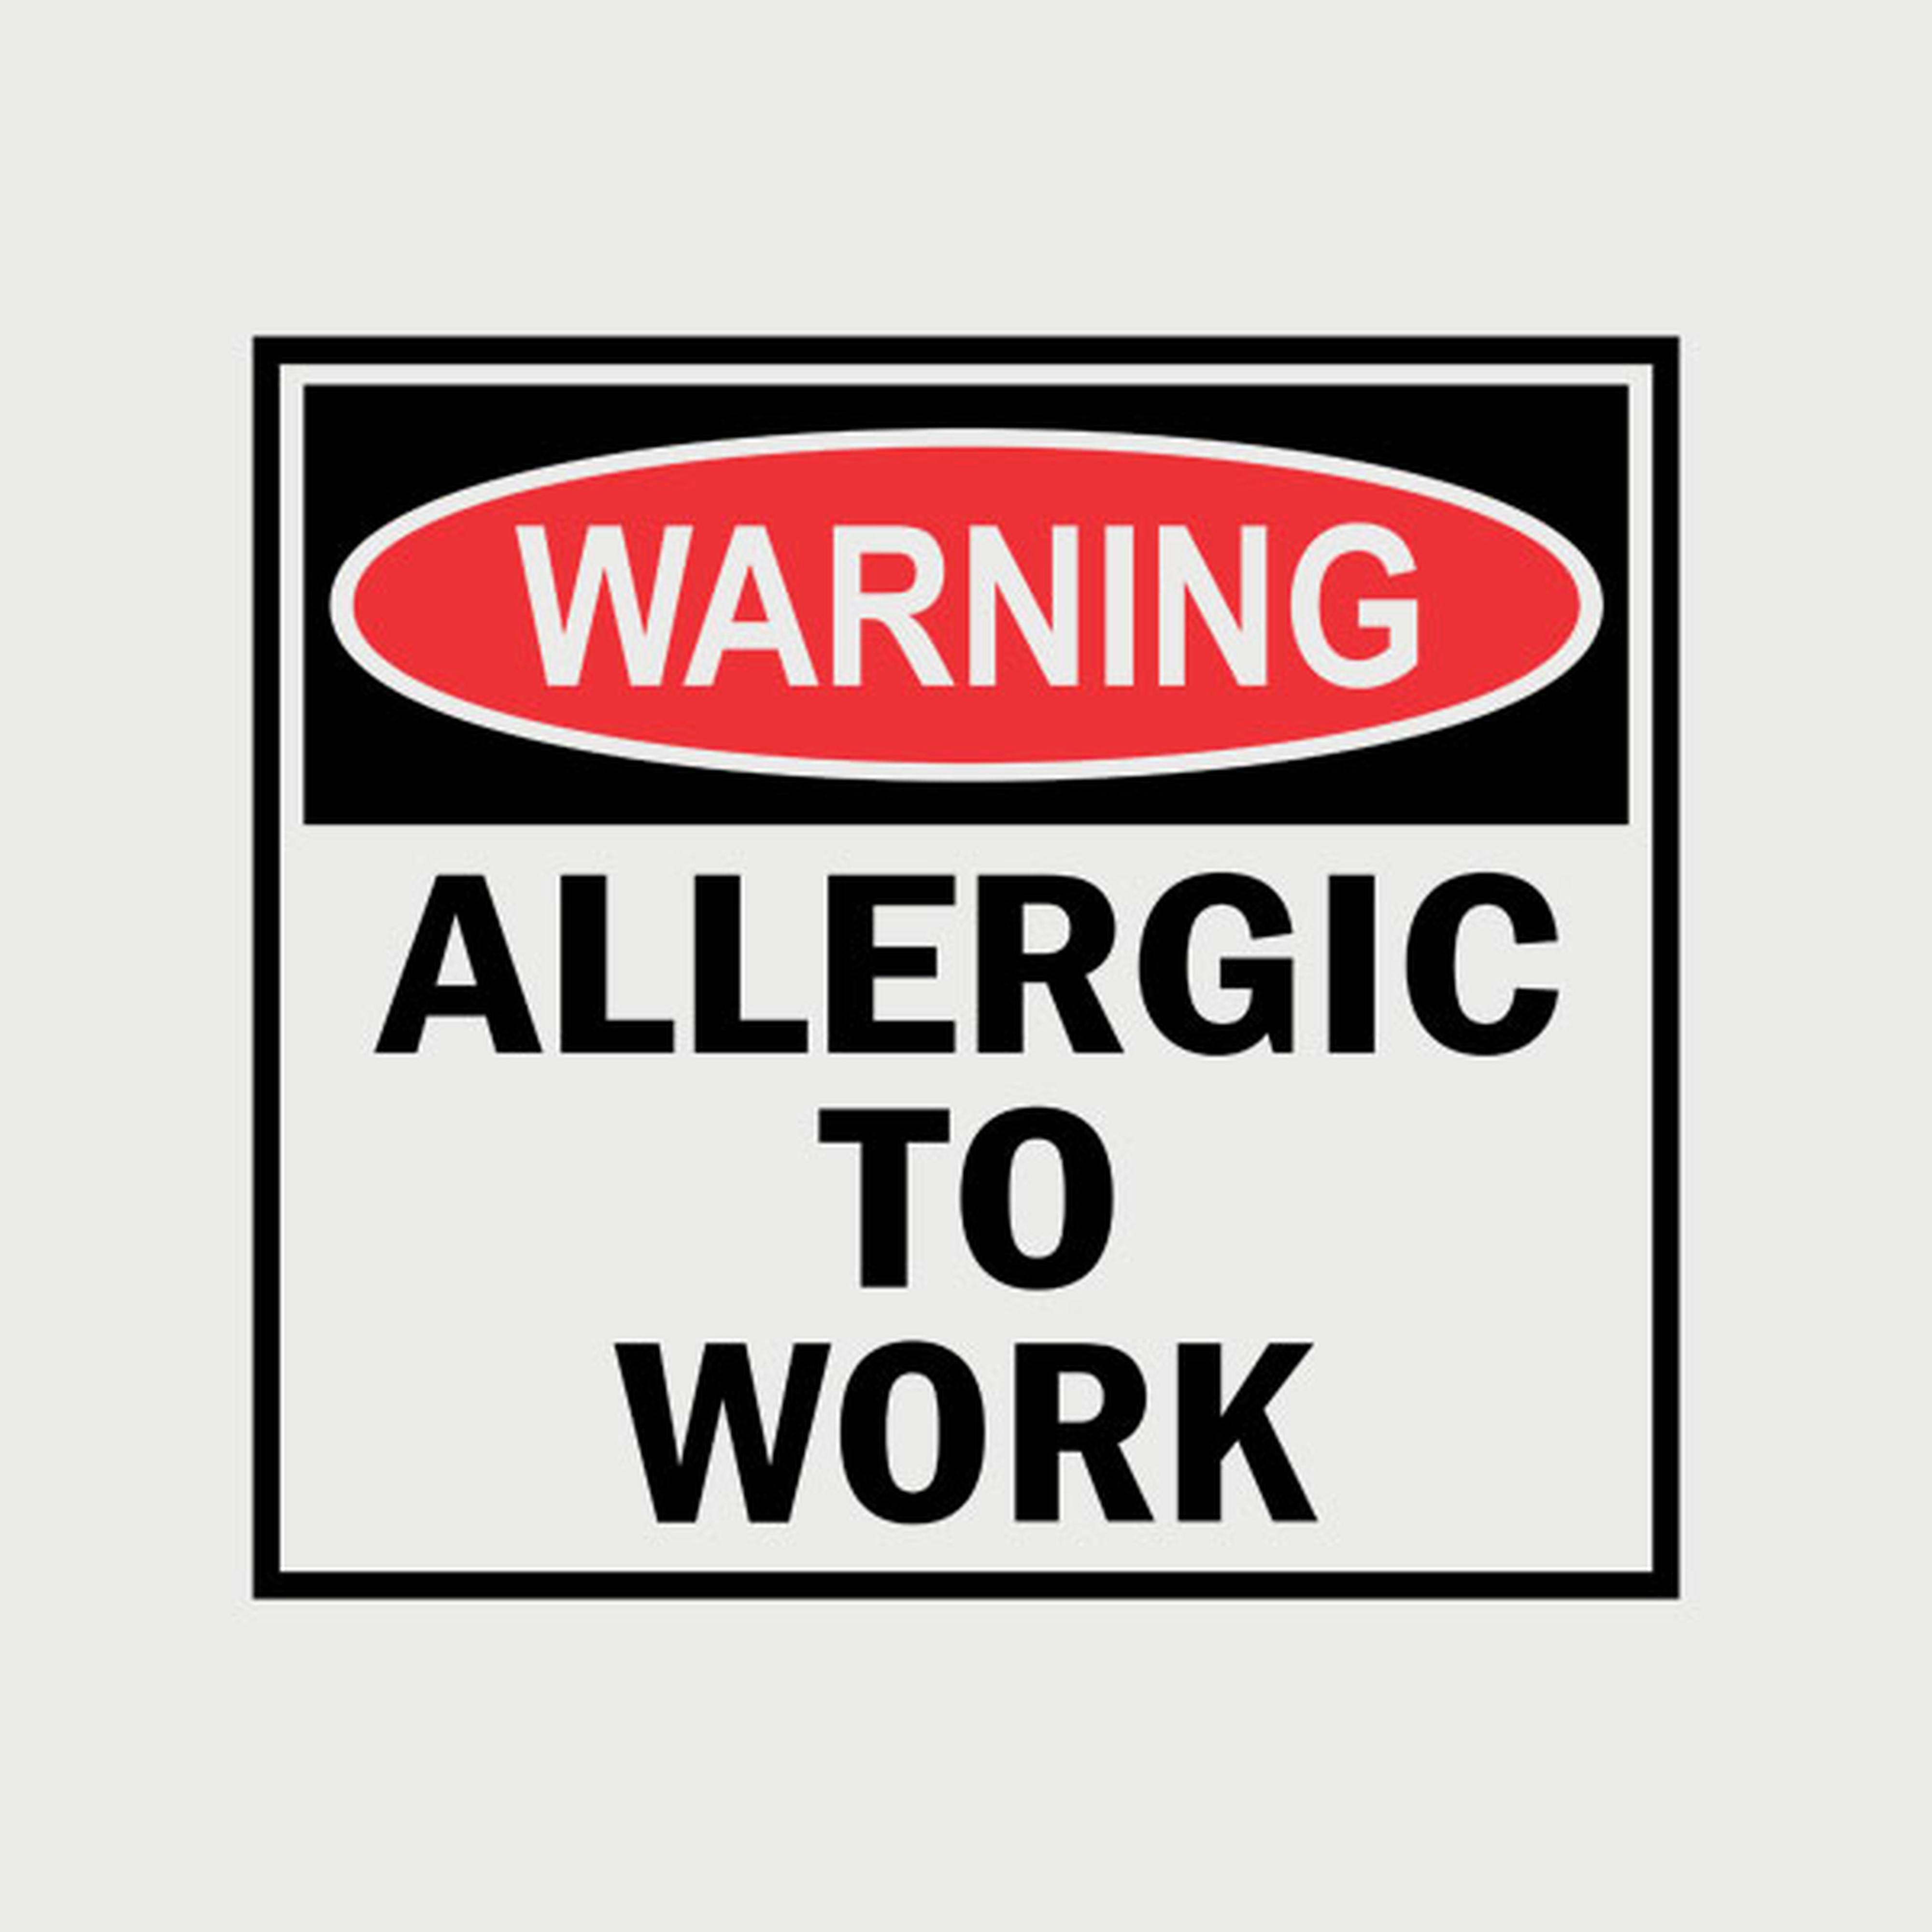 Allergic to work